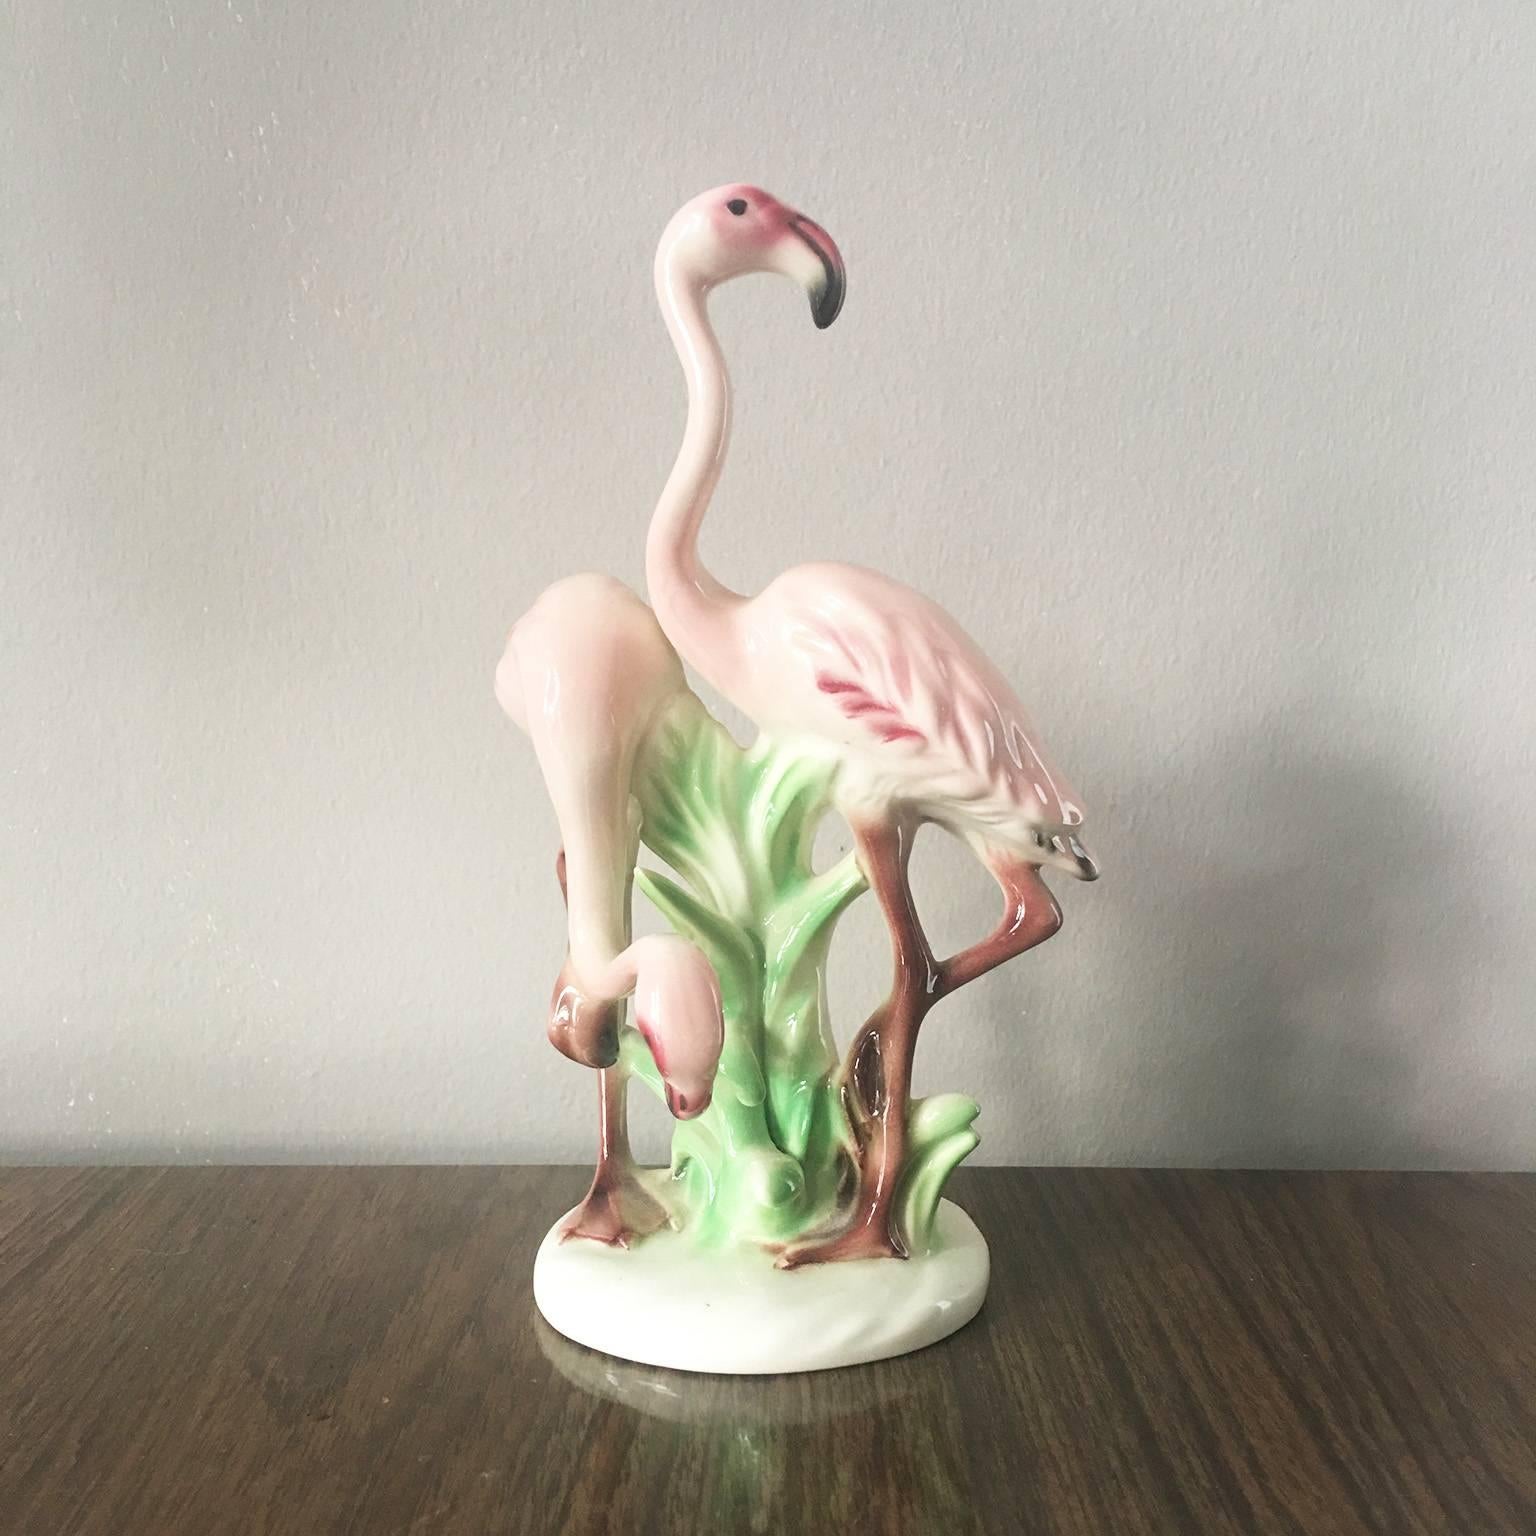 Vintage double pink flamingo figurine stamped Goebel
Mint condition - no cips.
Measures: H 19 cm.